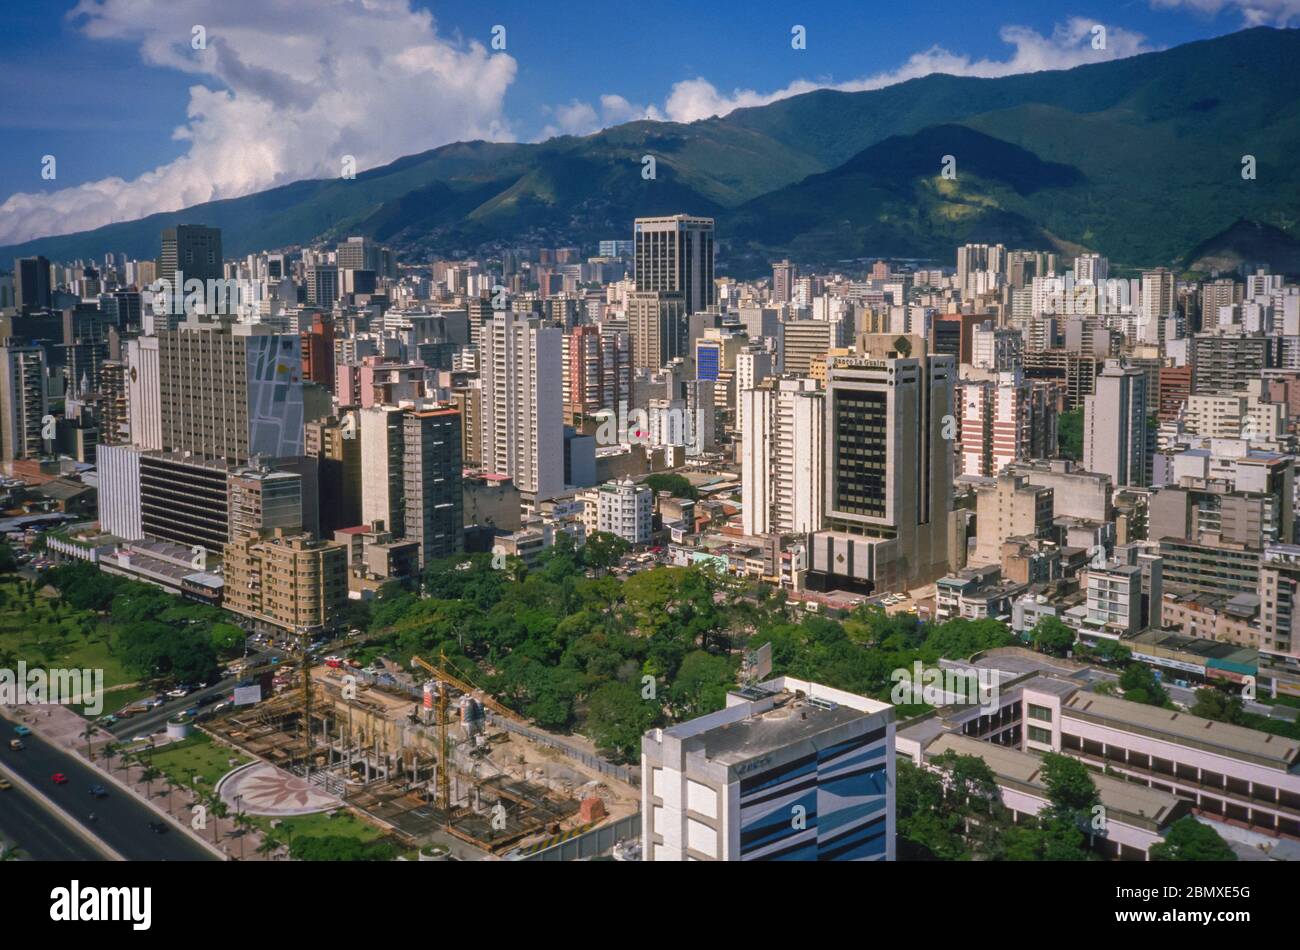 CARACAS, VENEZUELA - Aerial view of buildings in central Caracas in 1988. Stock Photo